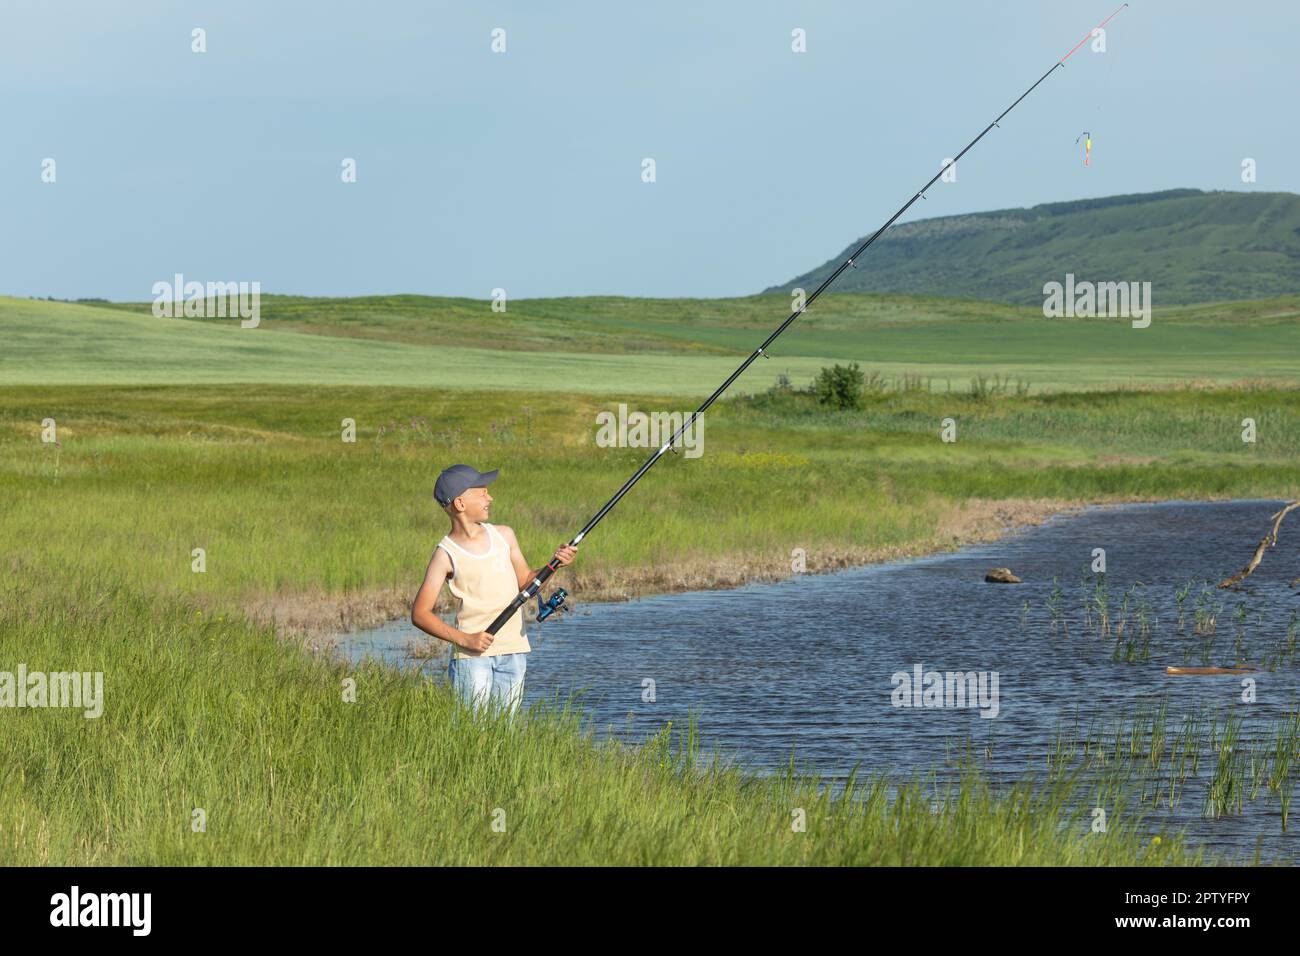 Cheerful boy wearing raincoat holding fishing net Stock Photo - Alamy